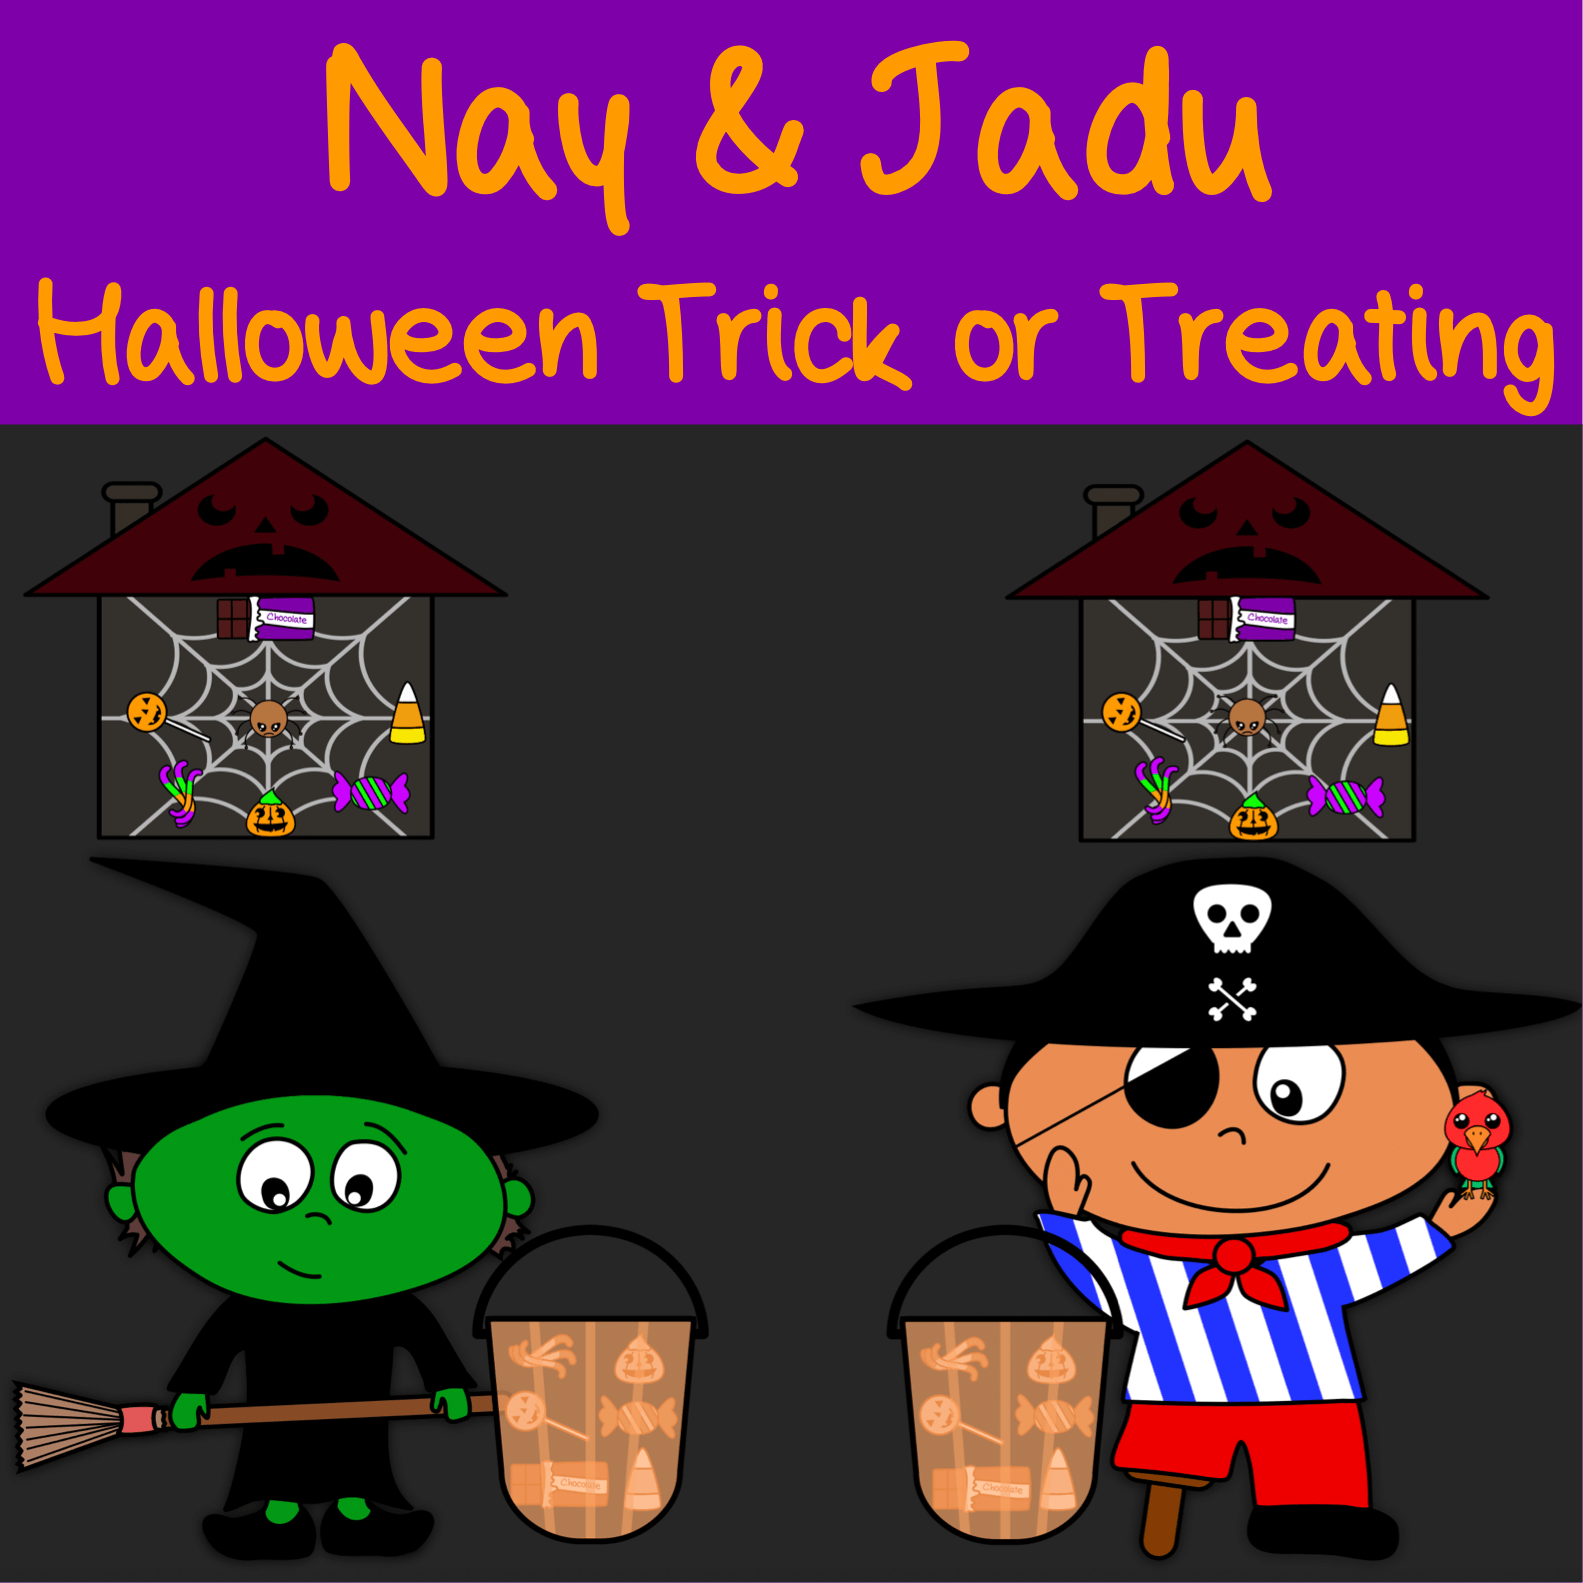 Nay and Jadu – Trick or Treating